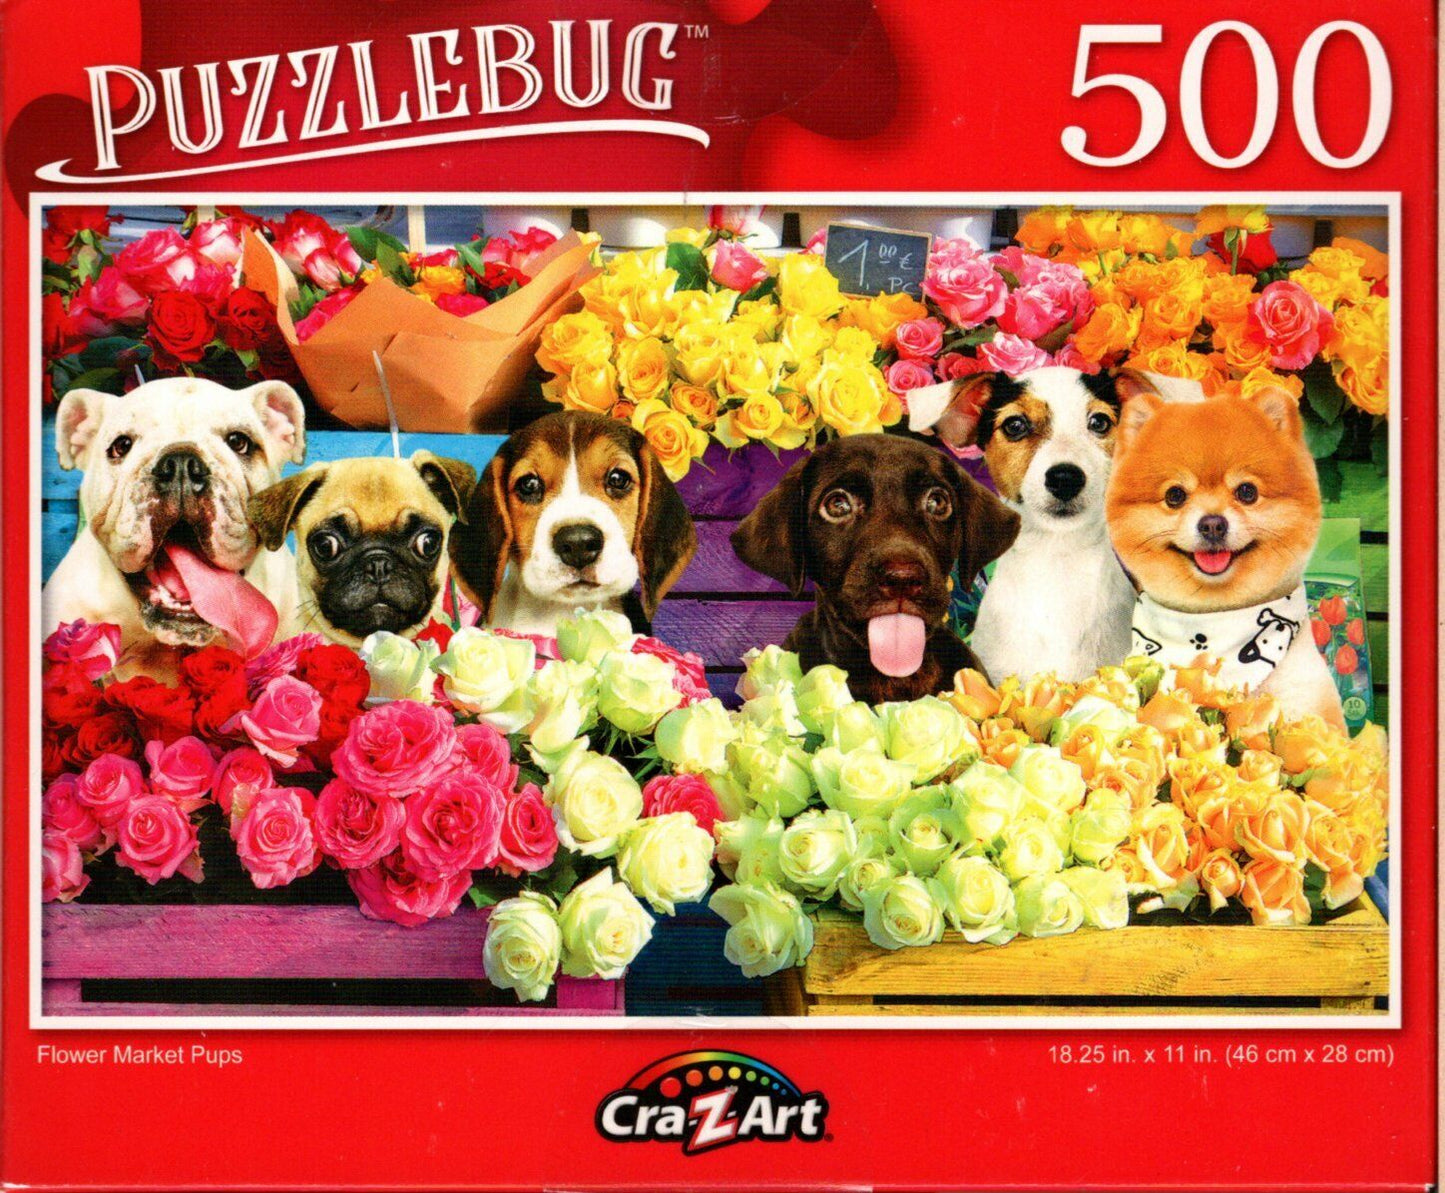 Flower Market Pups - 500 Jigsaw Puzzle